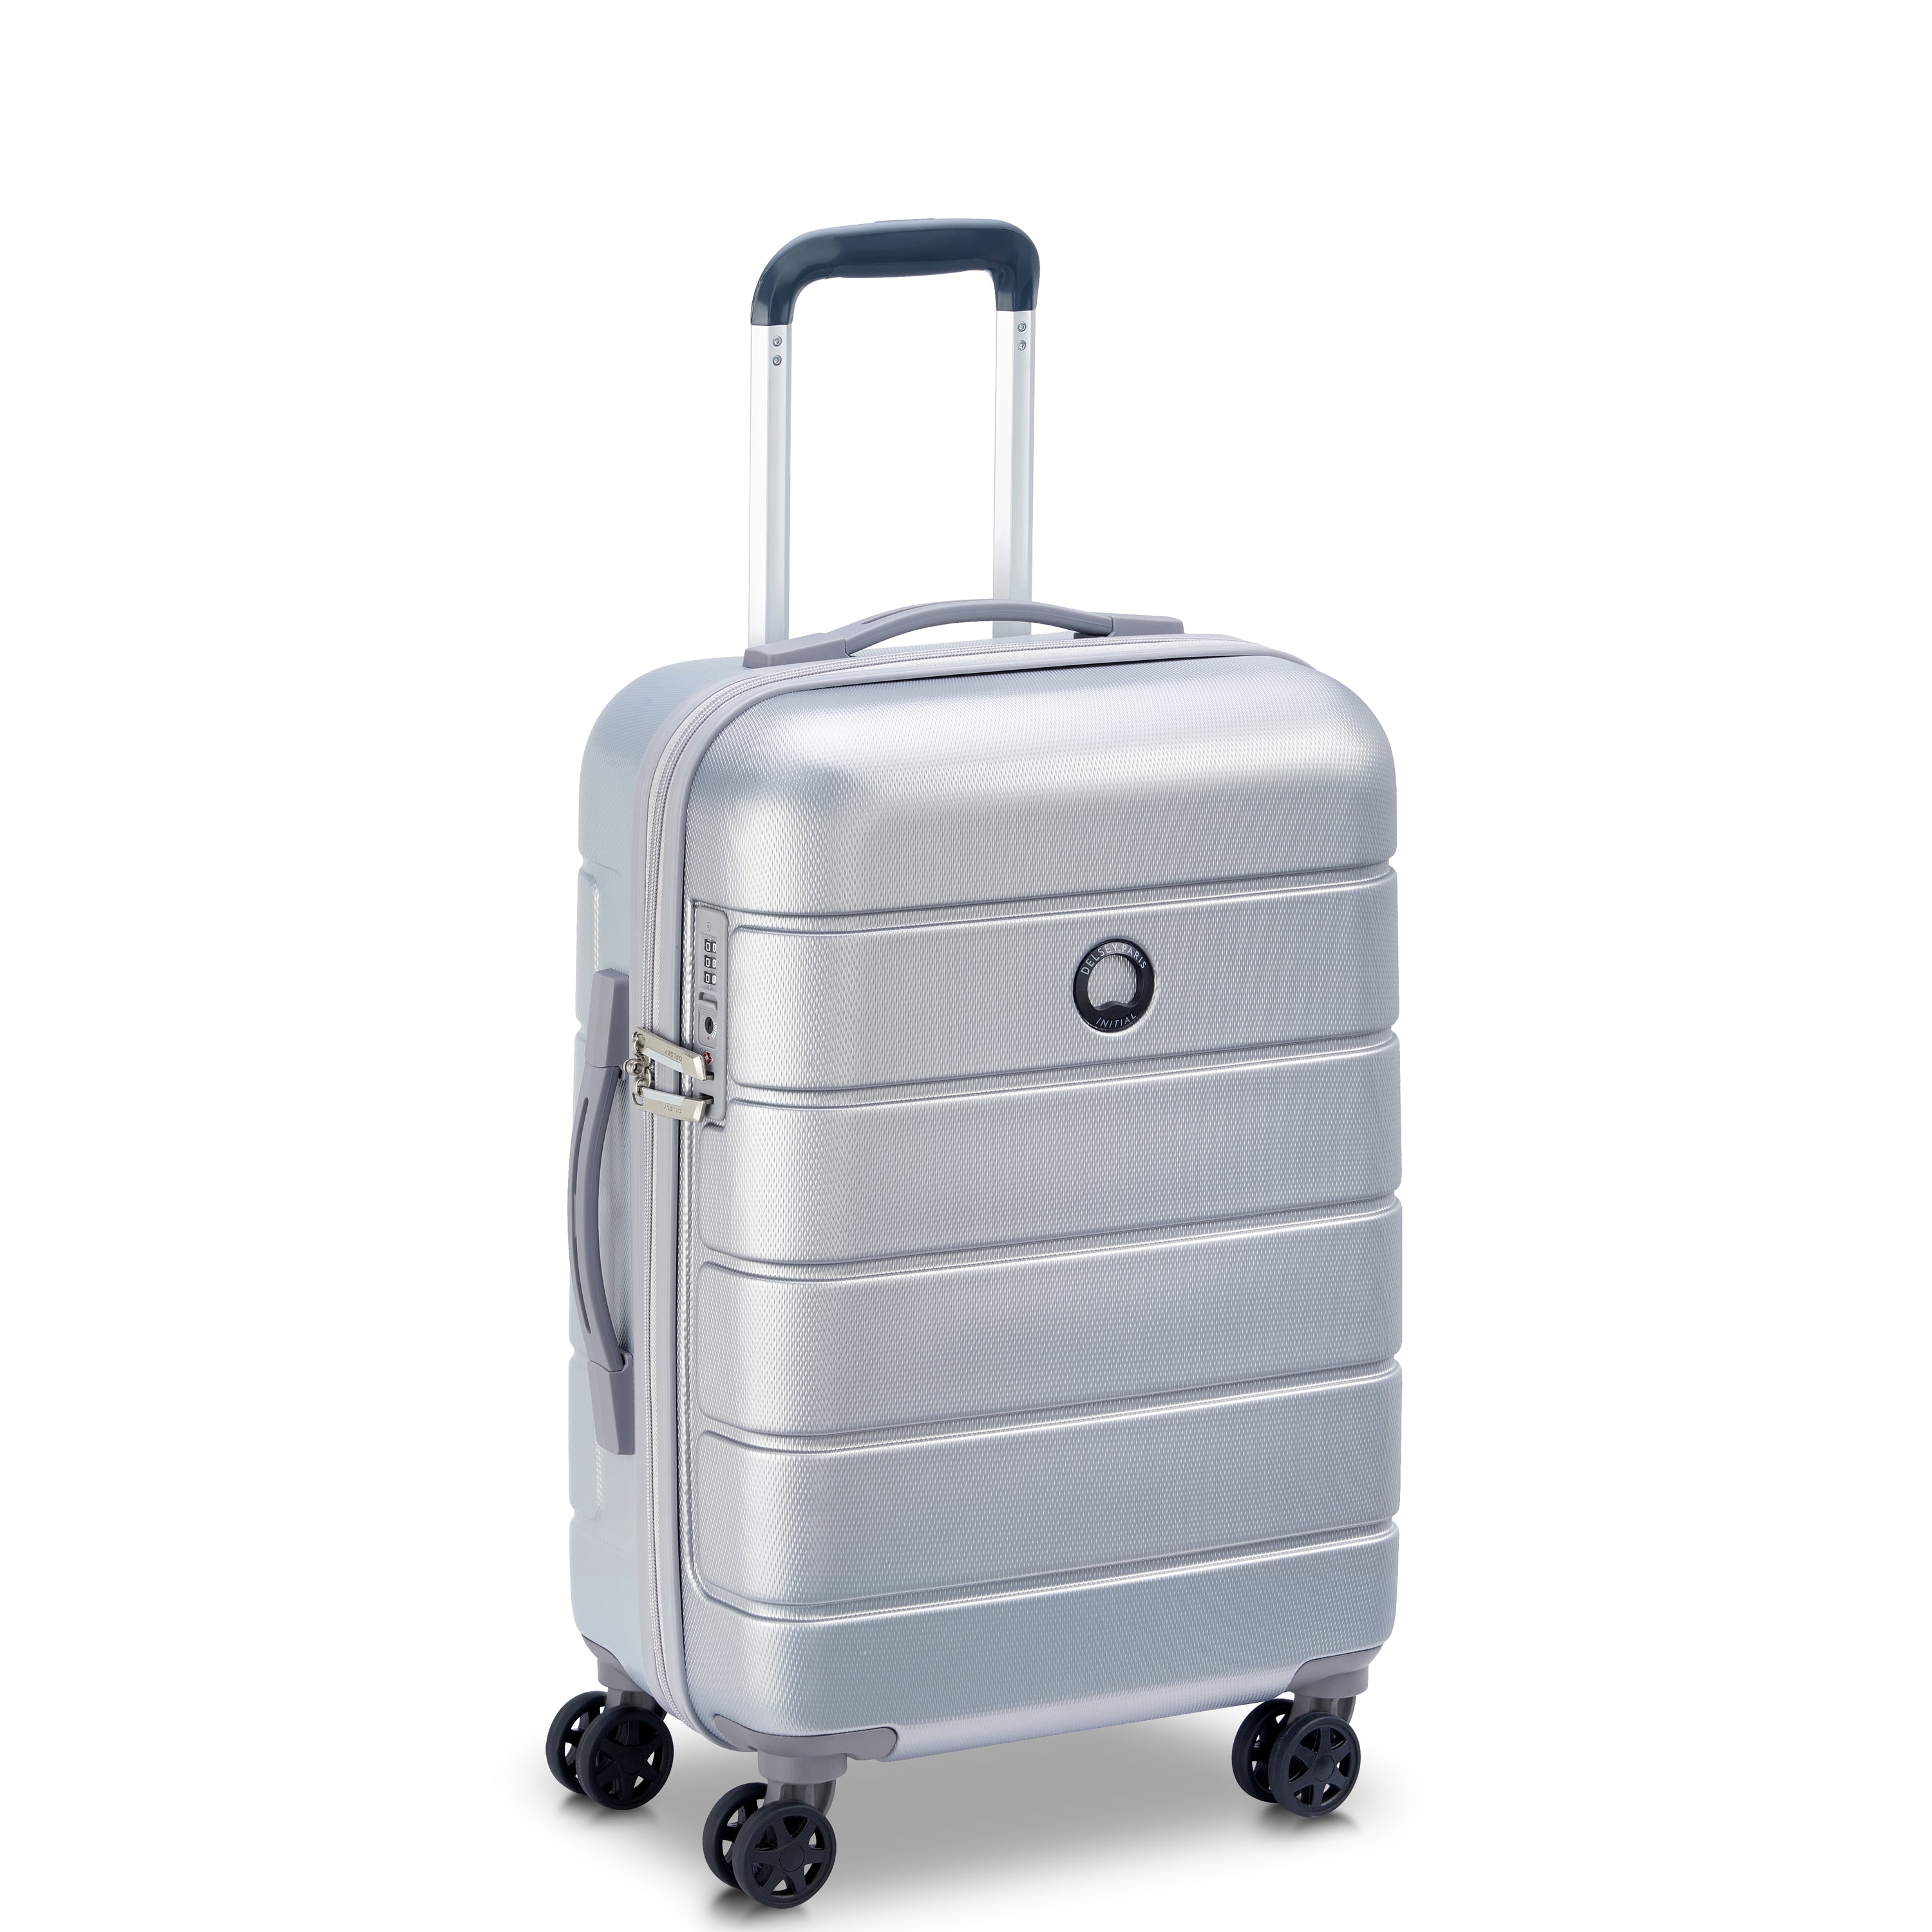 Delsey Lagos 55cm Hardcase 4 Double Wheel Cabin Luggage Trolley Case Silver - 00387080111W9